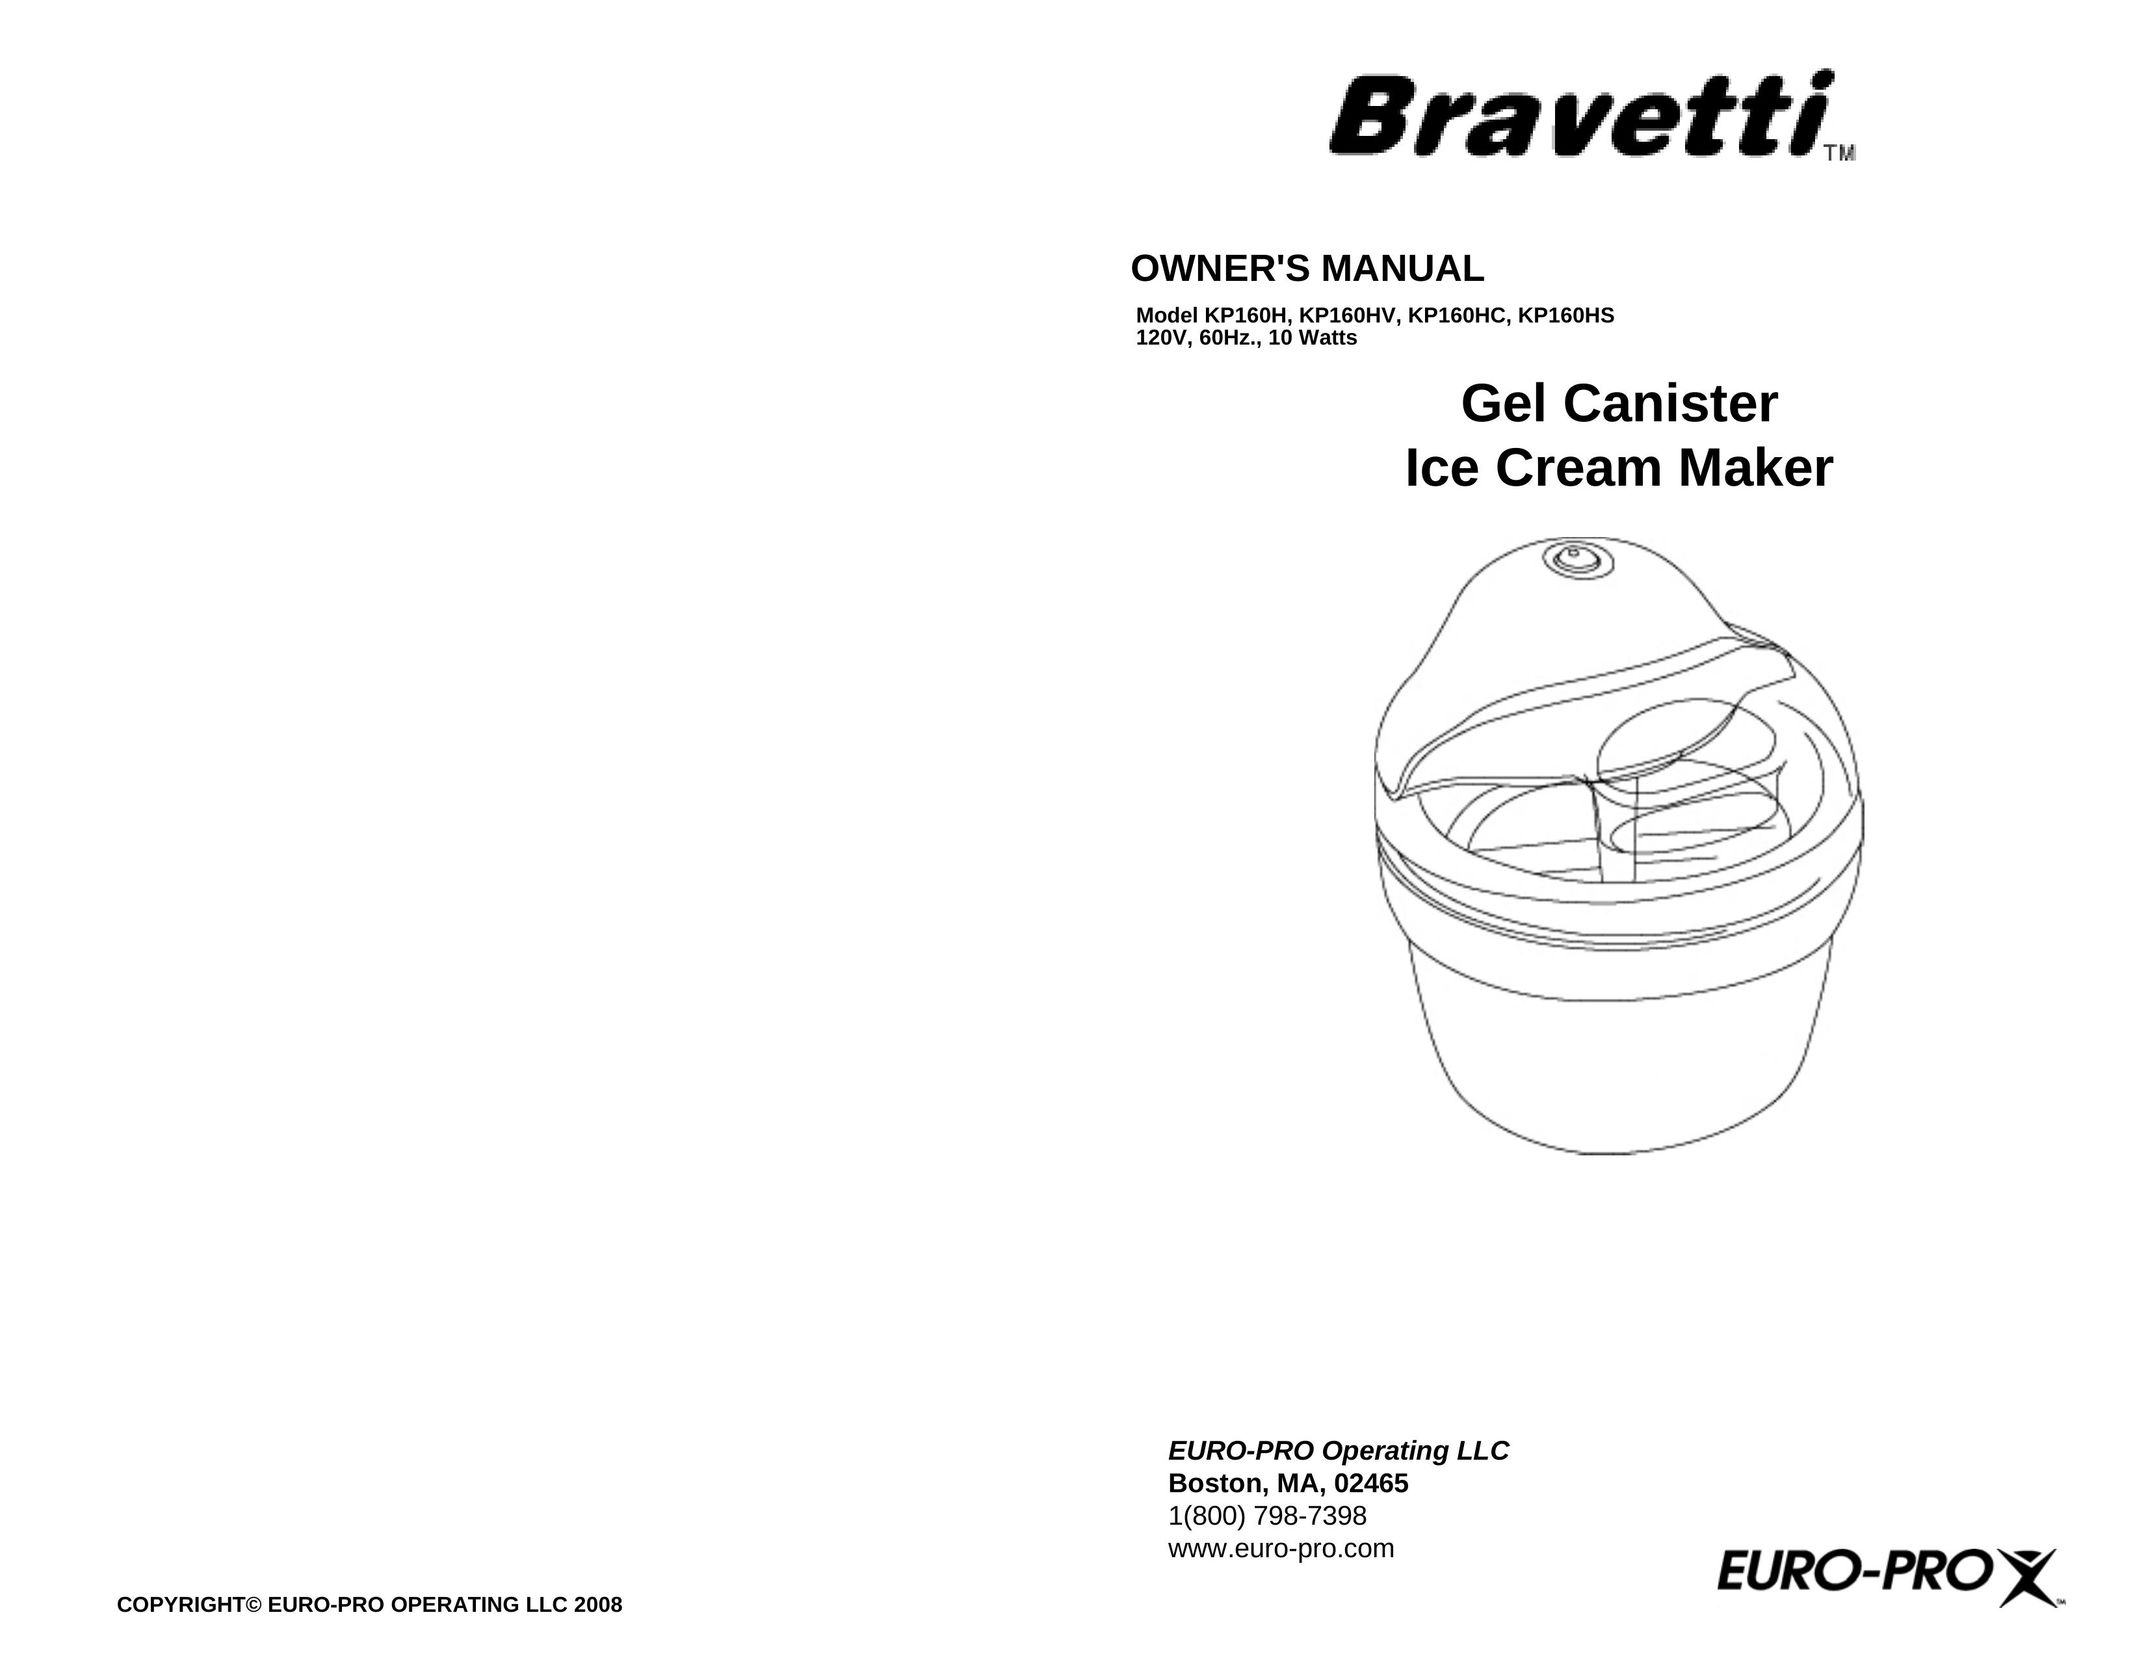 Bravetti 10 WATTS Frozen Dessert Maker User Manual